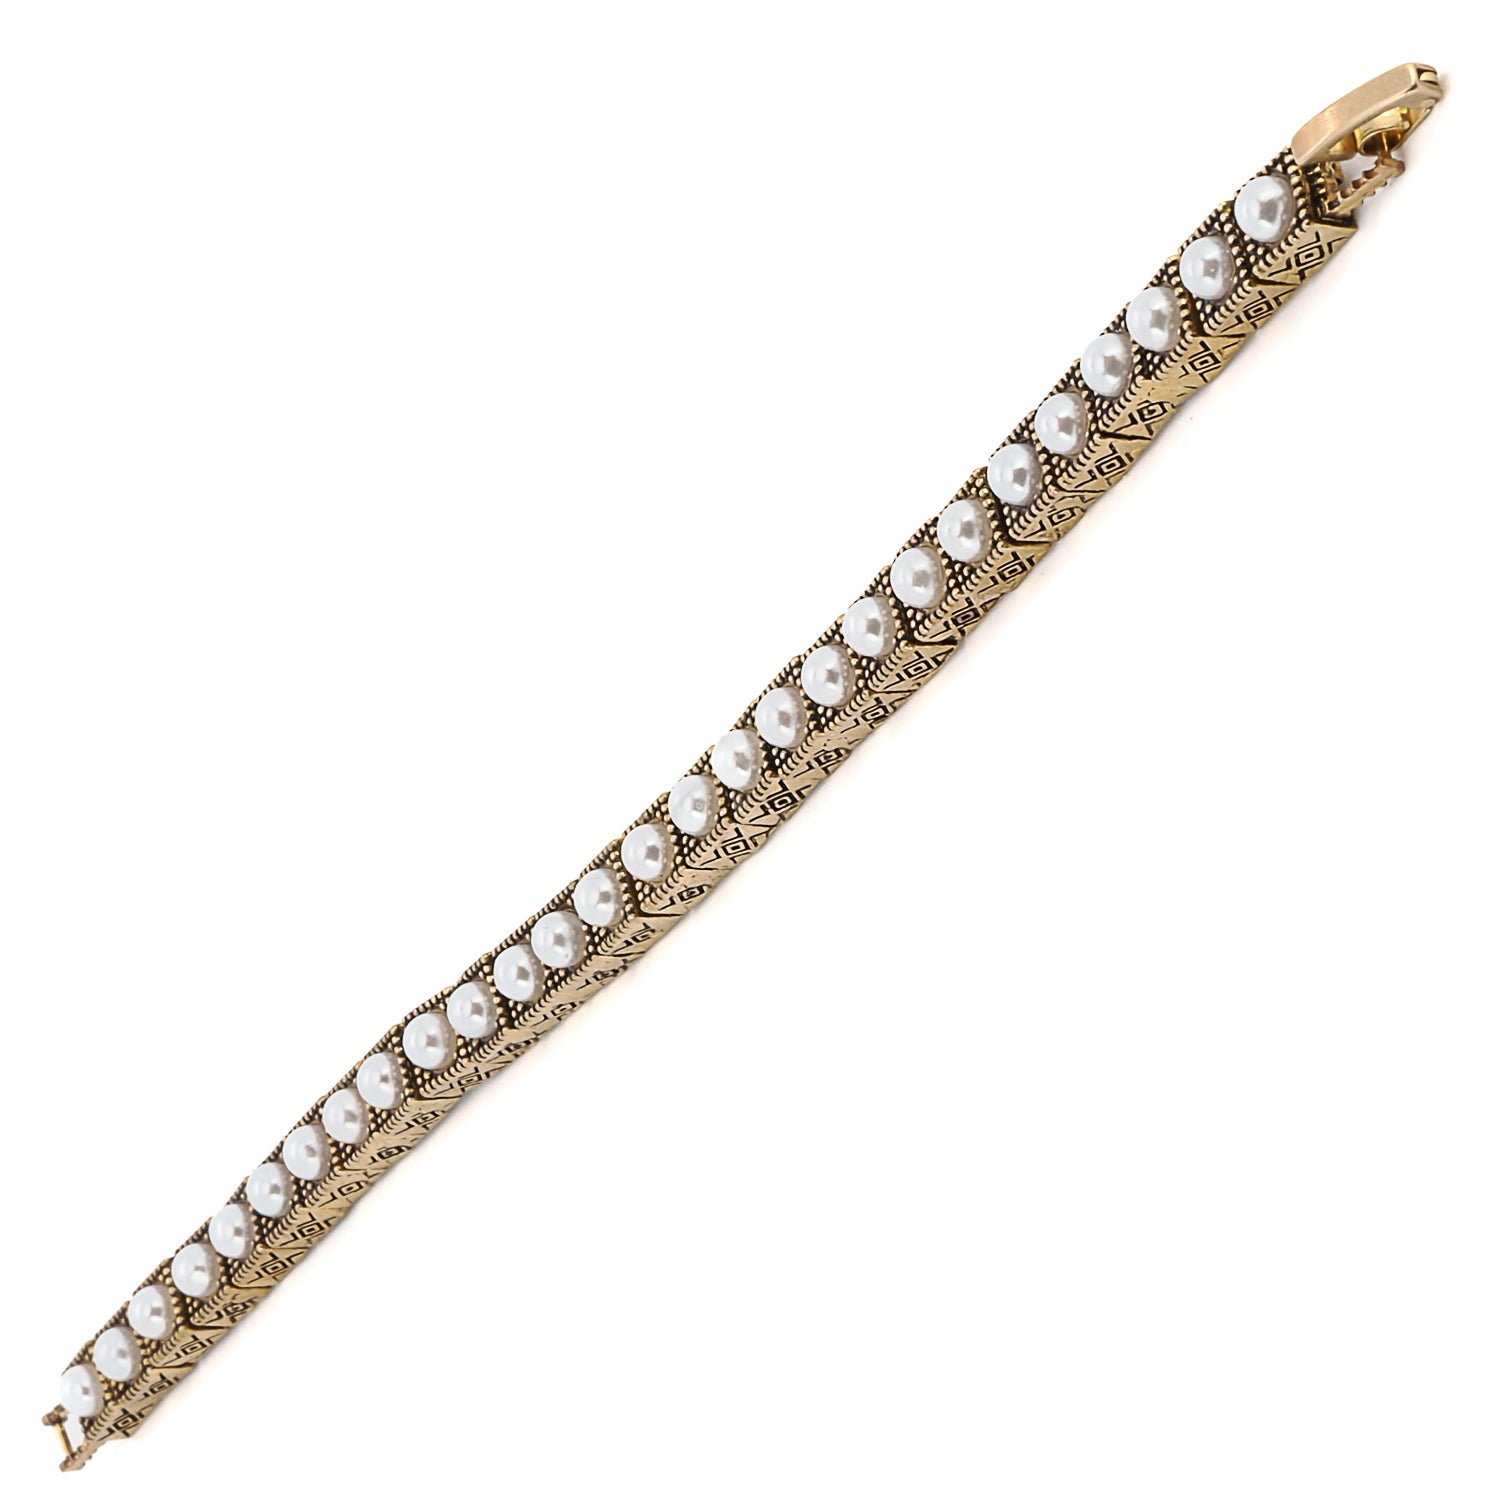 The Pearl Tennis Bracelet, a statement piece that exudes timeless charm.